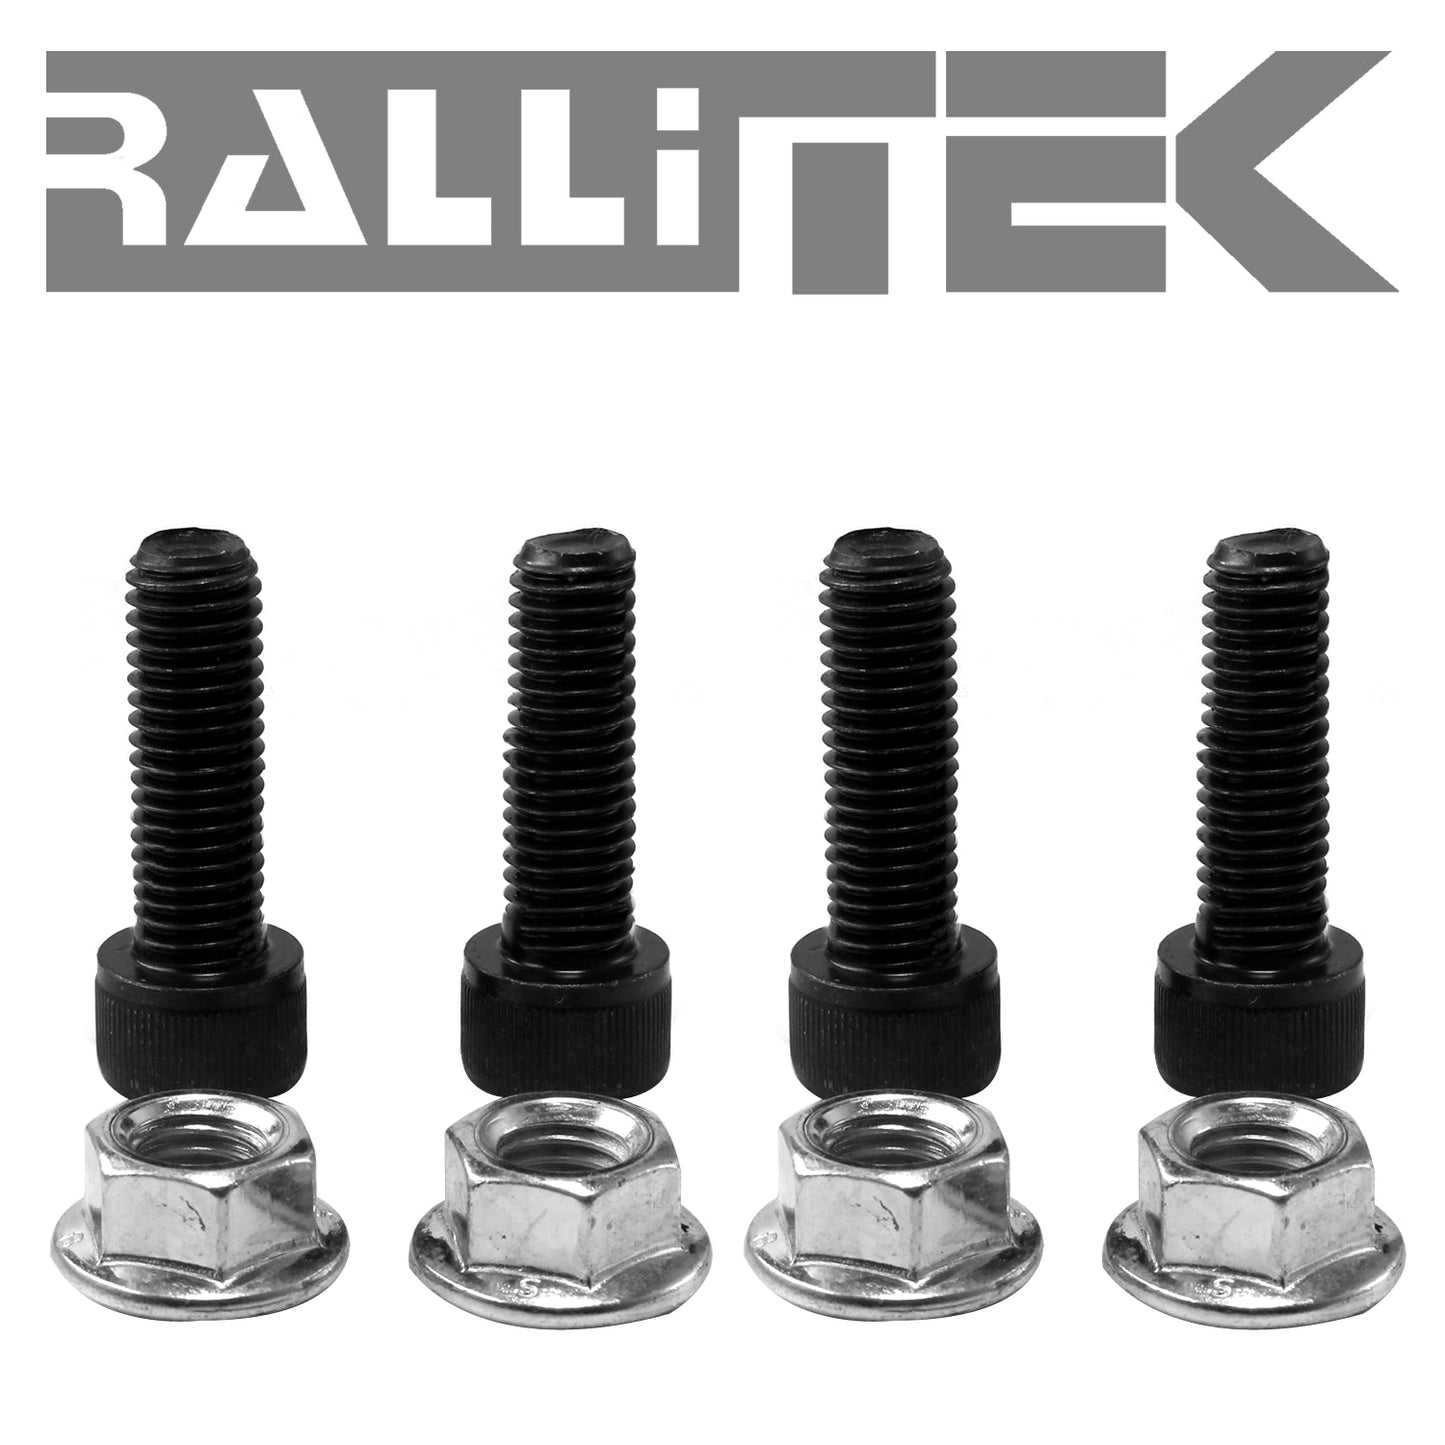 RalliTEK 0.5" Rear Lift Kit Spacers - All Impreza 2008-2017 / BRZ 2013-2017 / FR-S 2013-2016 / Outback 2010-2018 / More